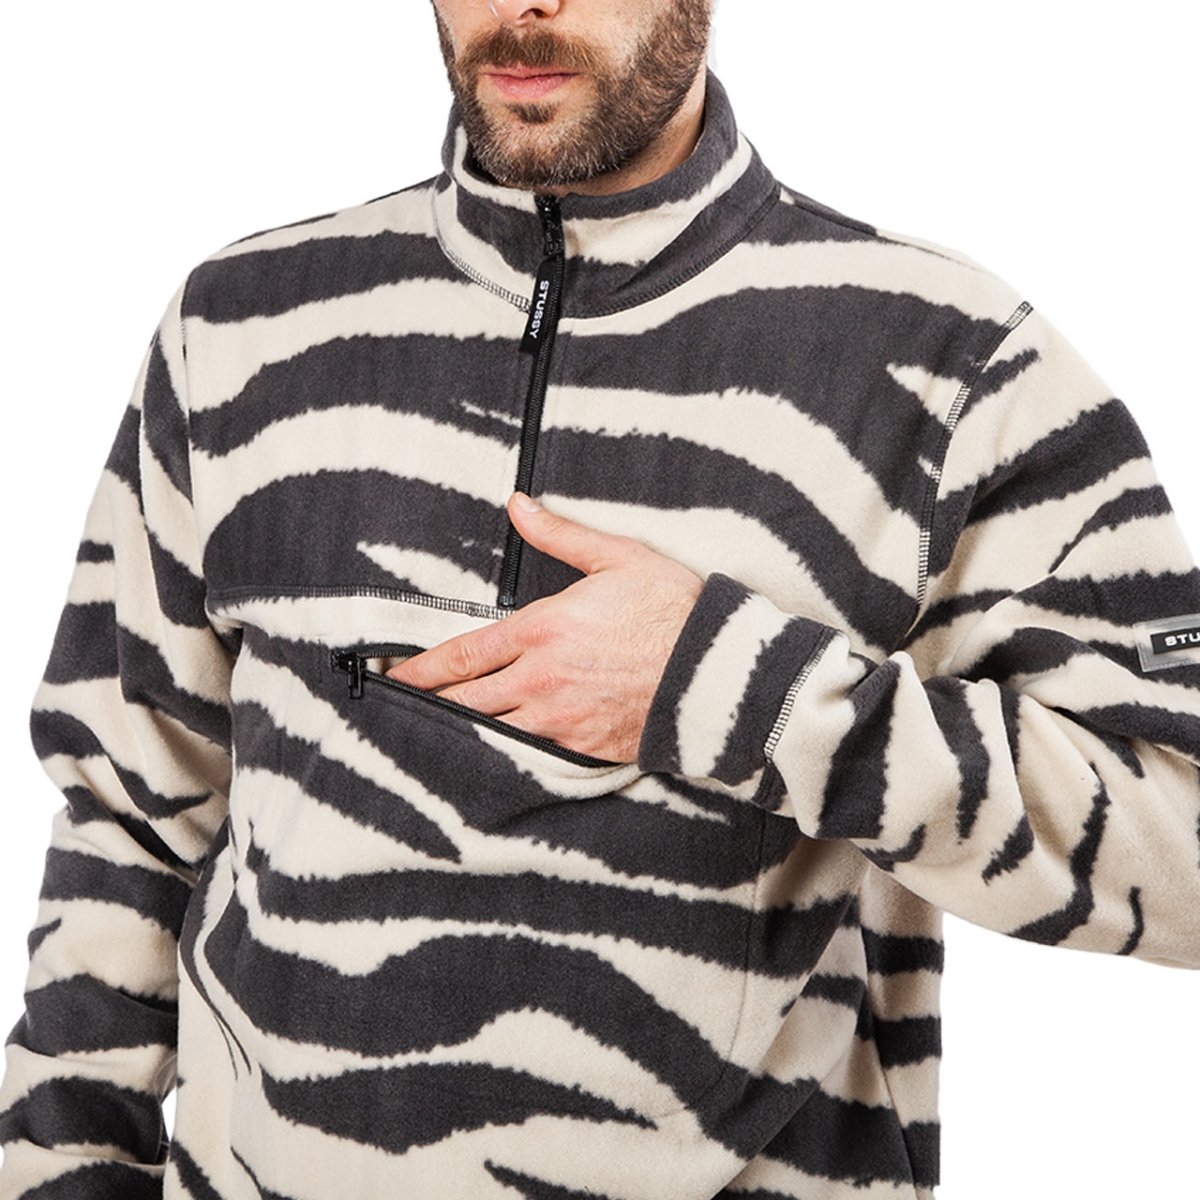 Stüssy Polar Fleece Mock Neck (Zebra)  - Allike Store